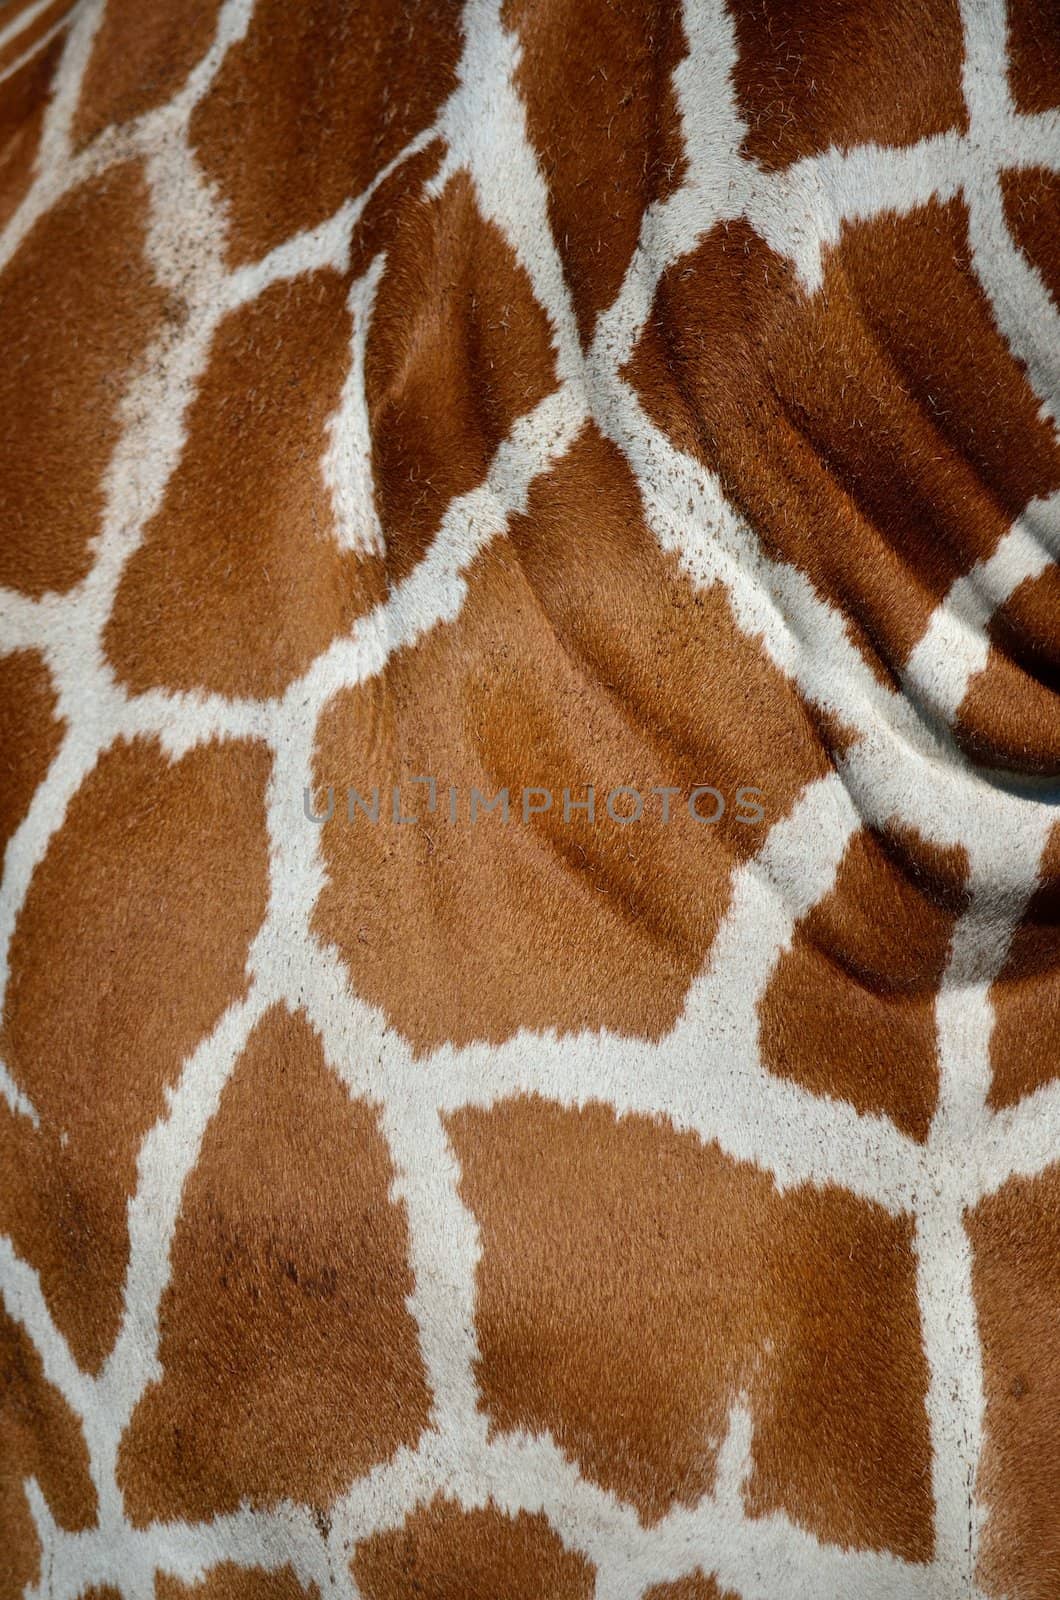 Close up of brown and white giraffe skin